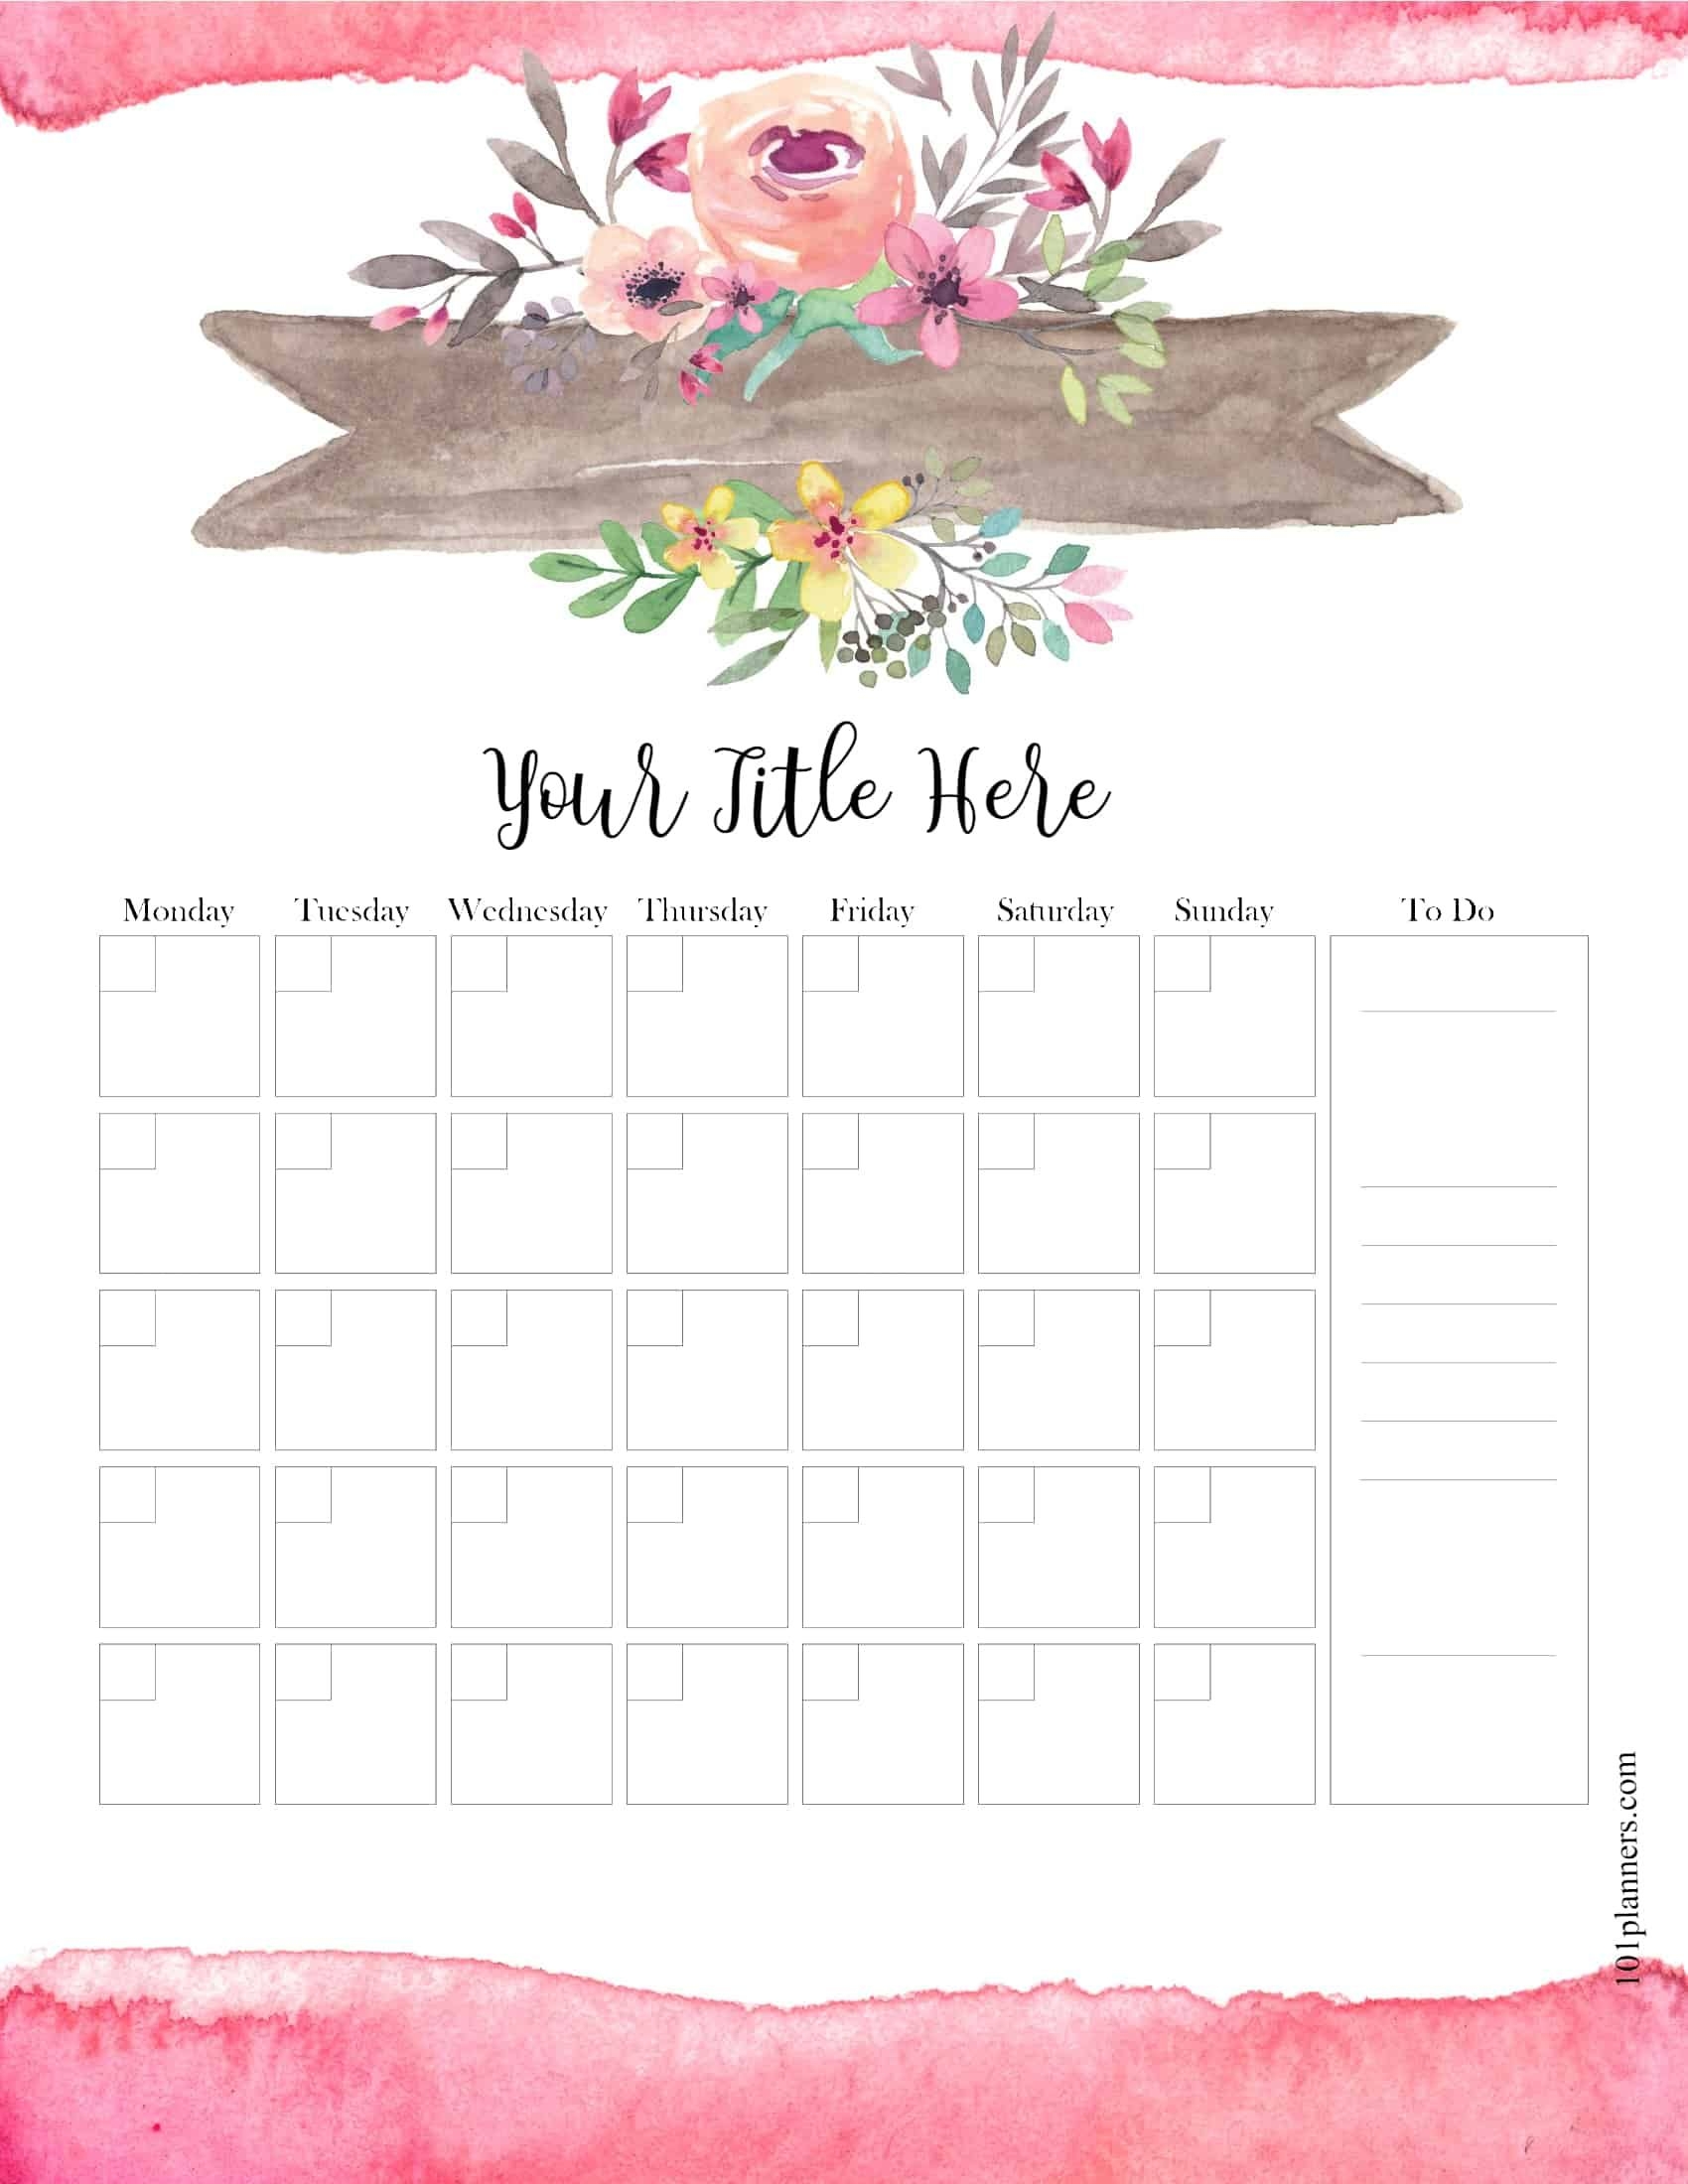 Effective One Day Hourly Calendar Free Printable Get Your Calendar 